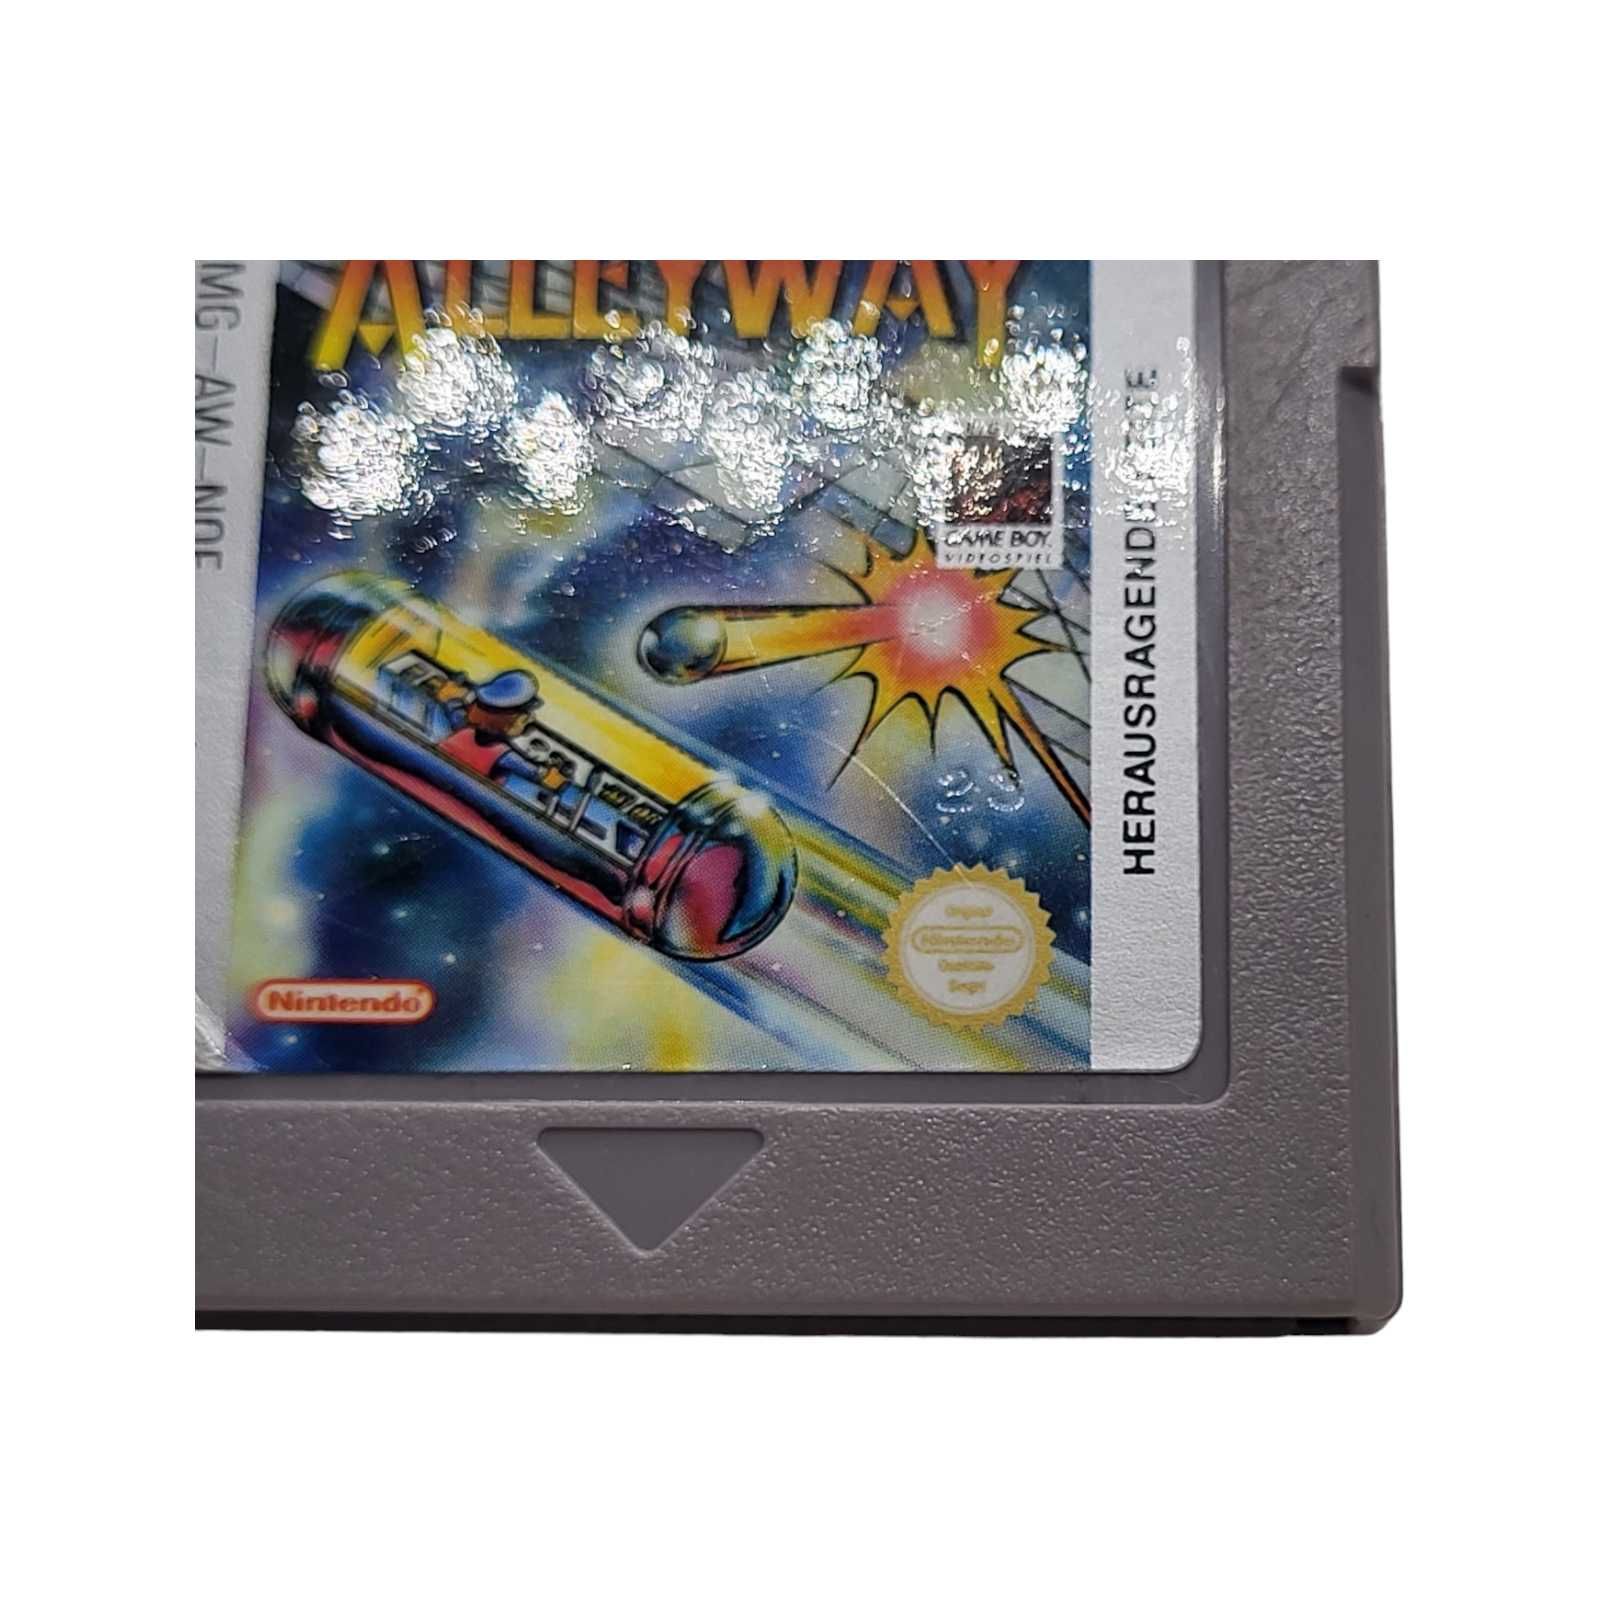 Alleyway Game Boy gameboy Classic